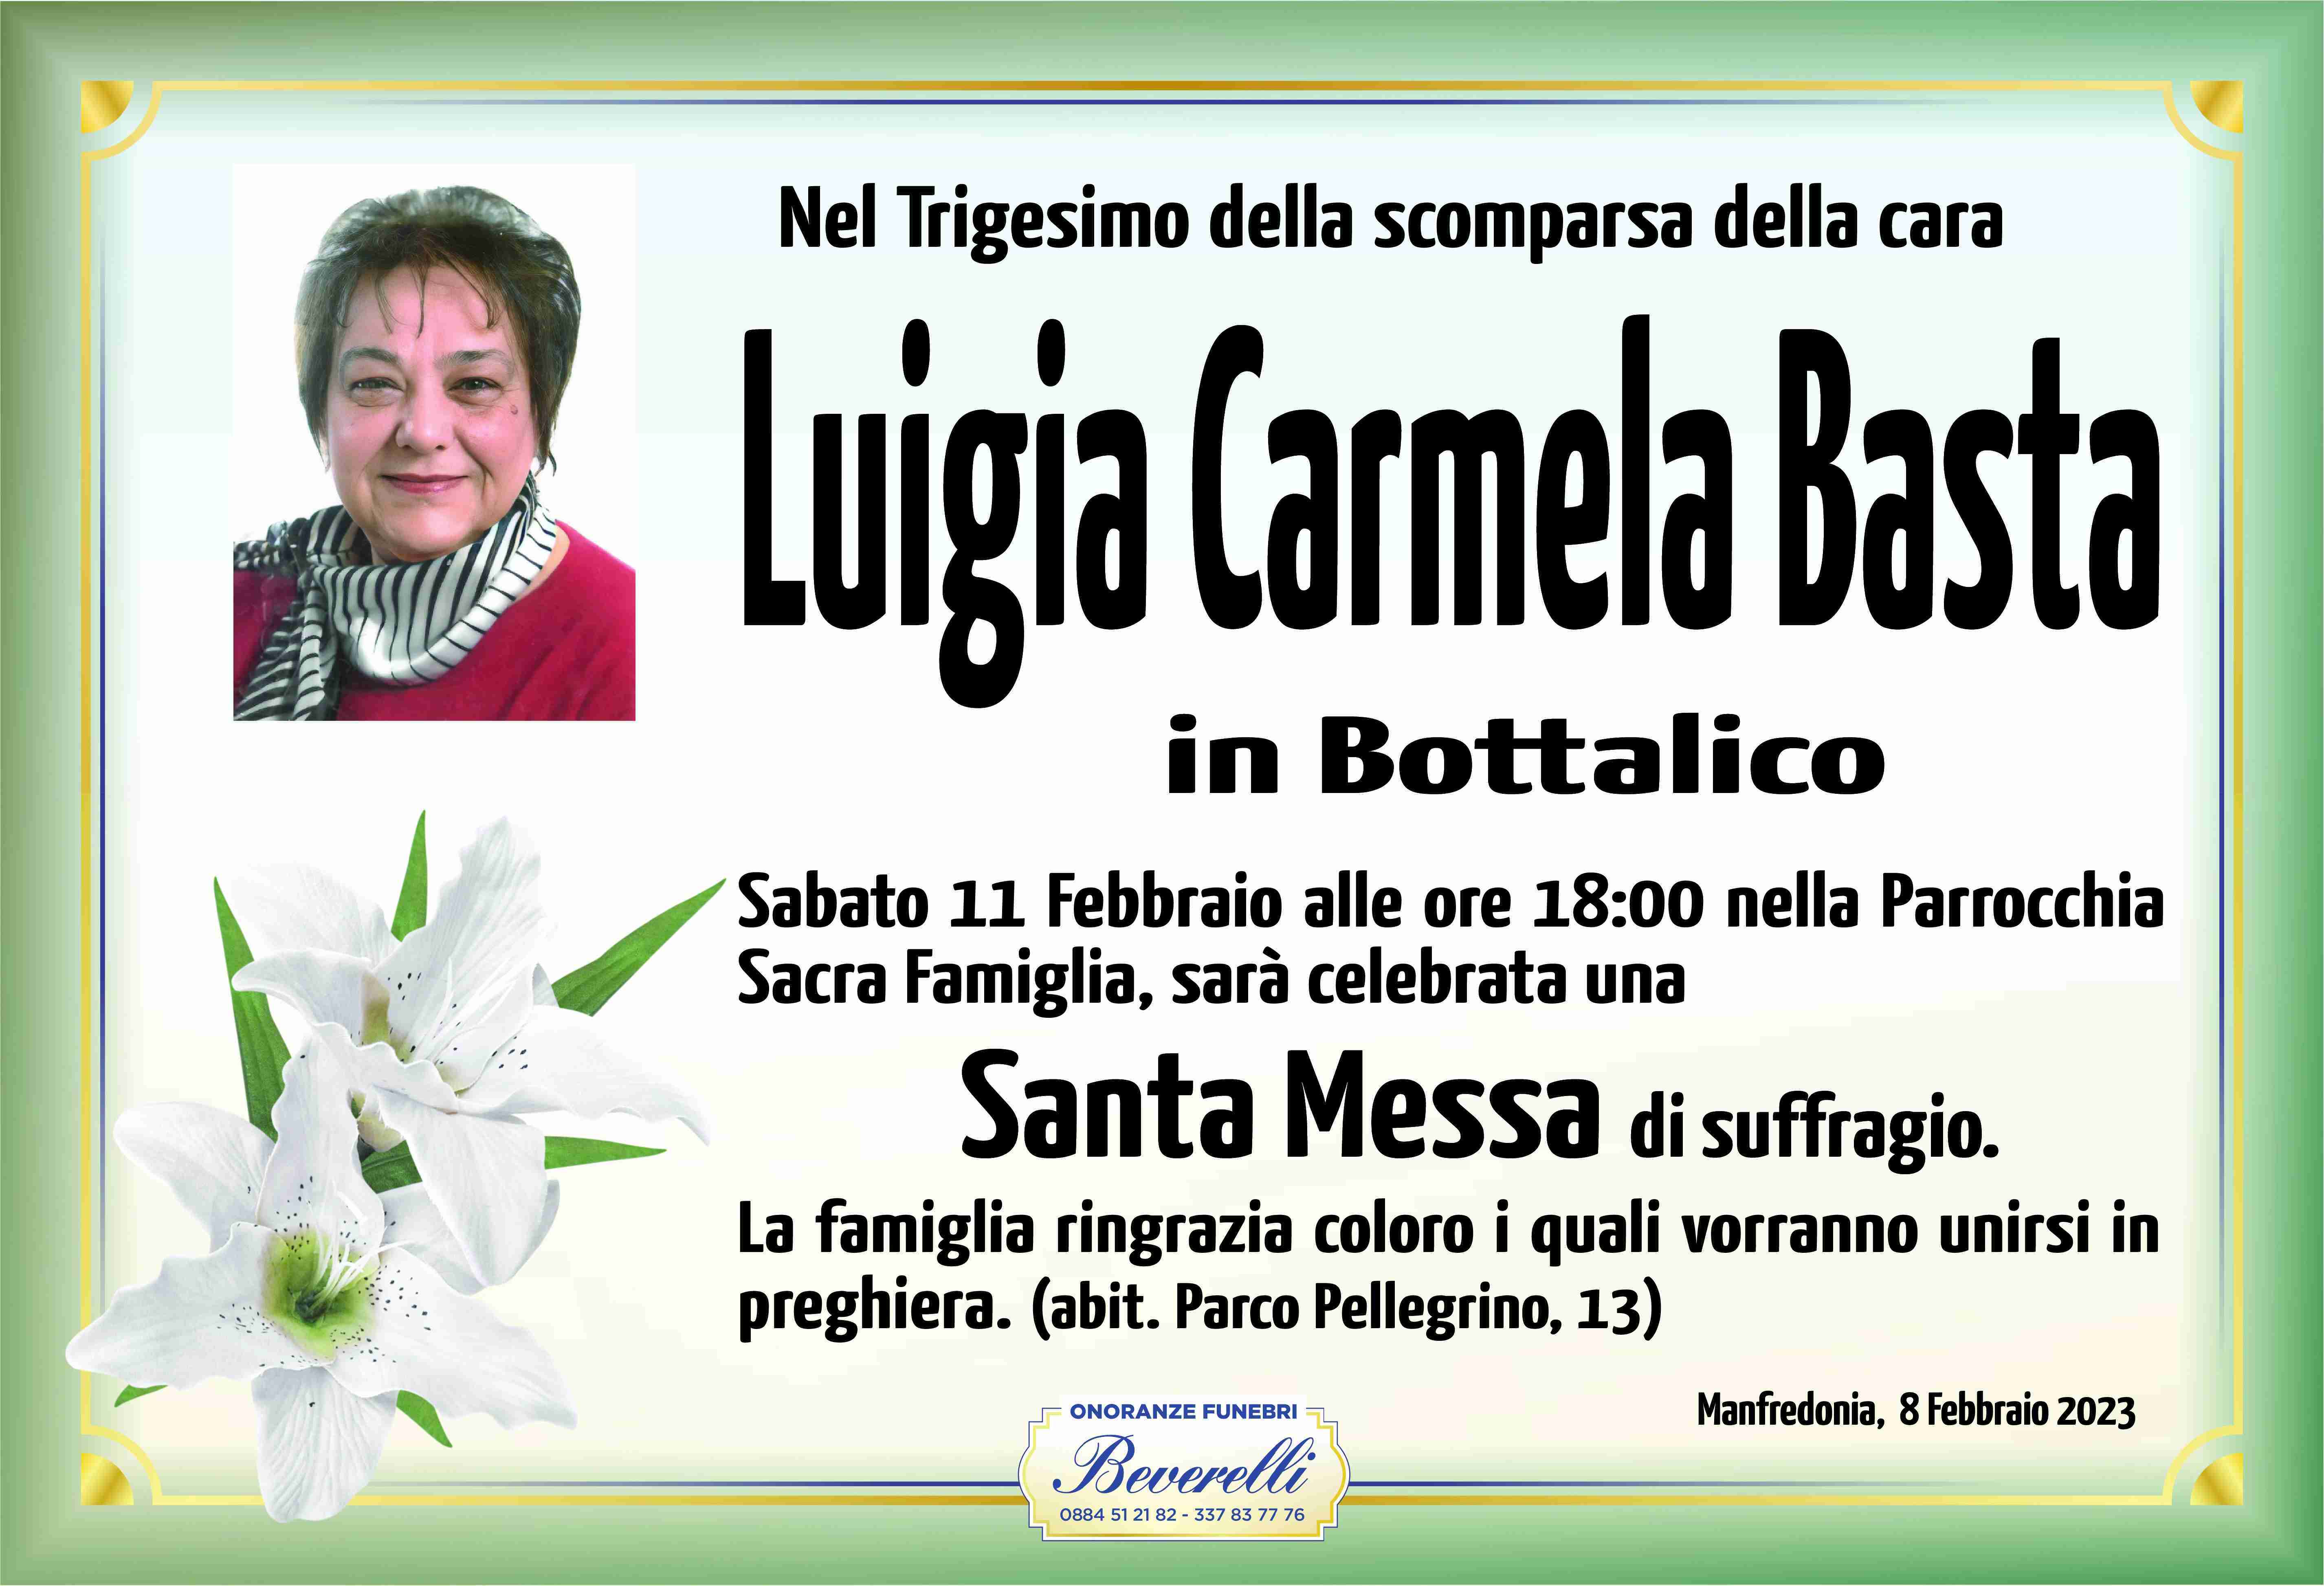 Luigia Carmela Basta